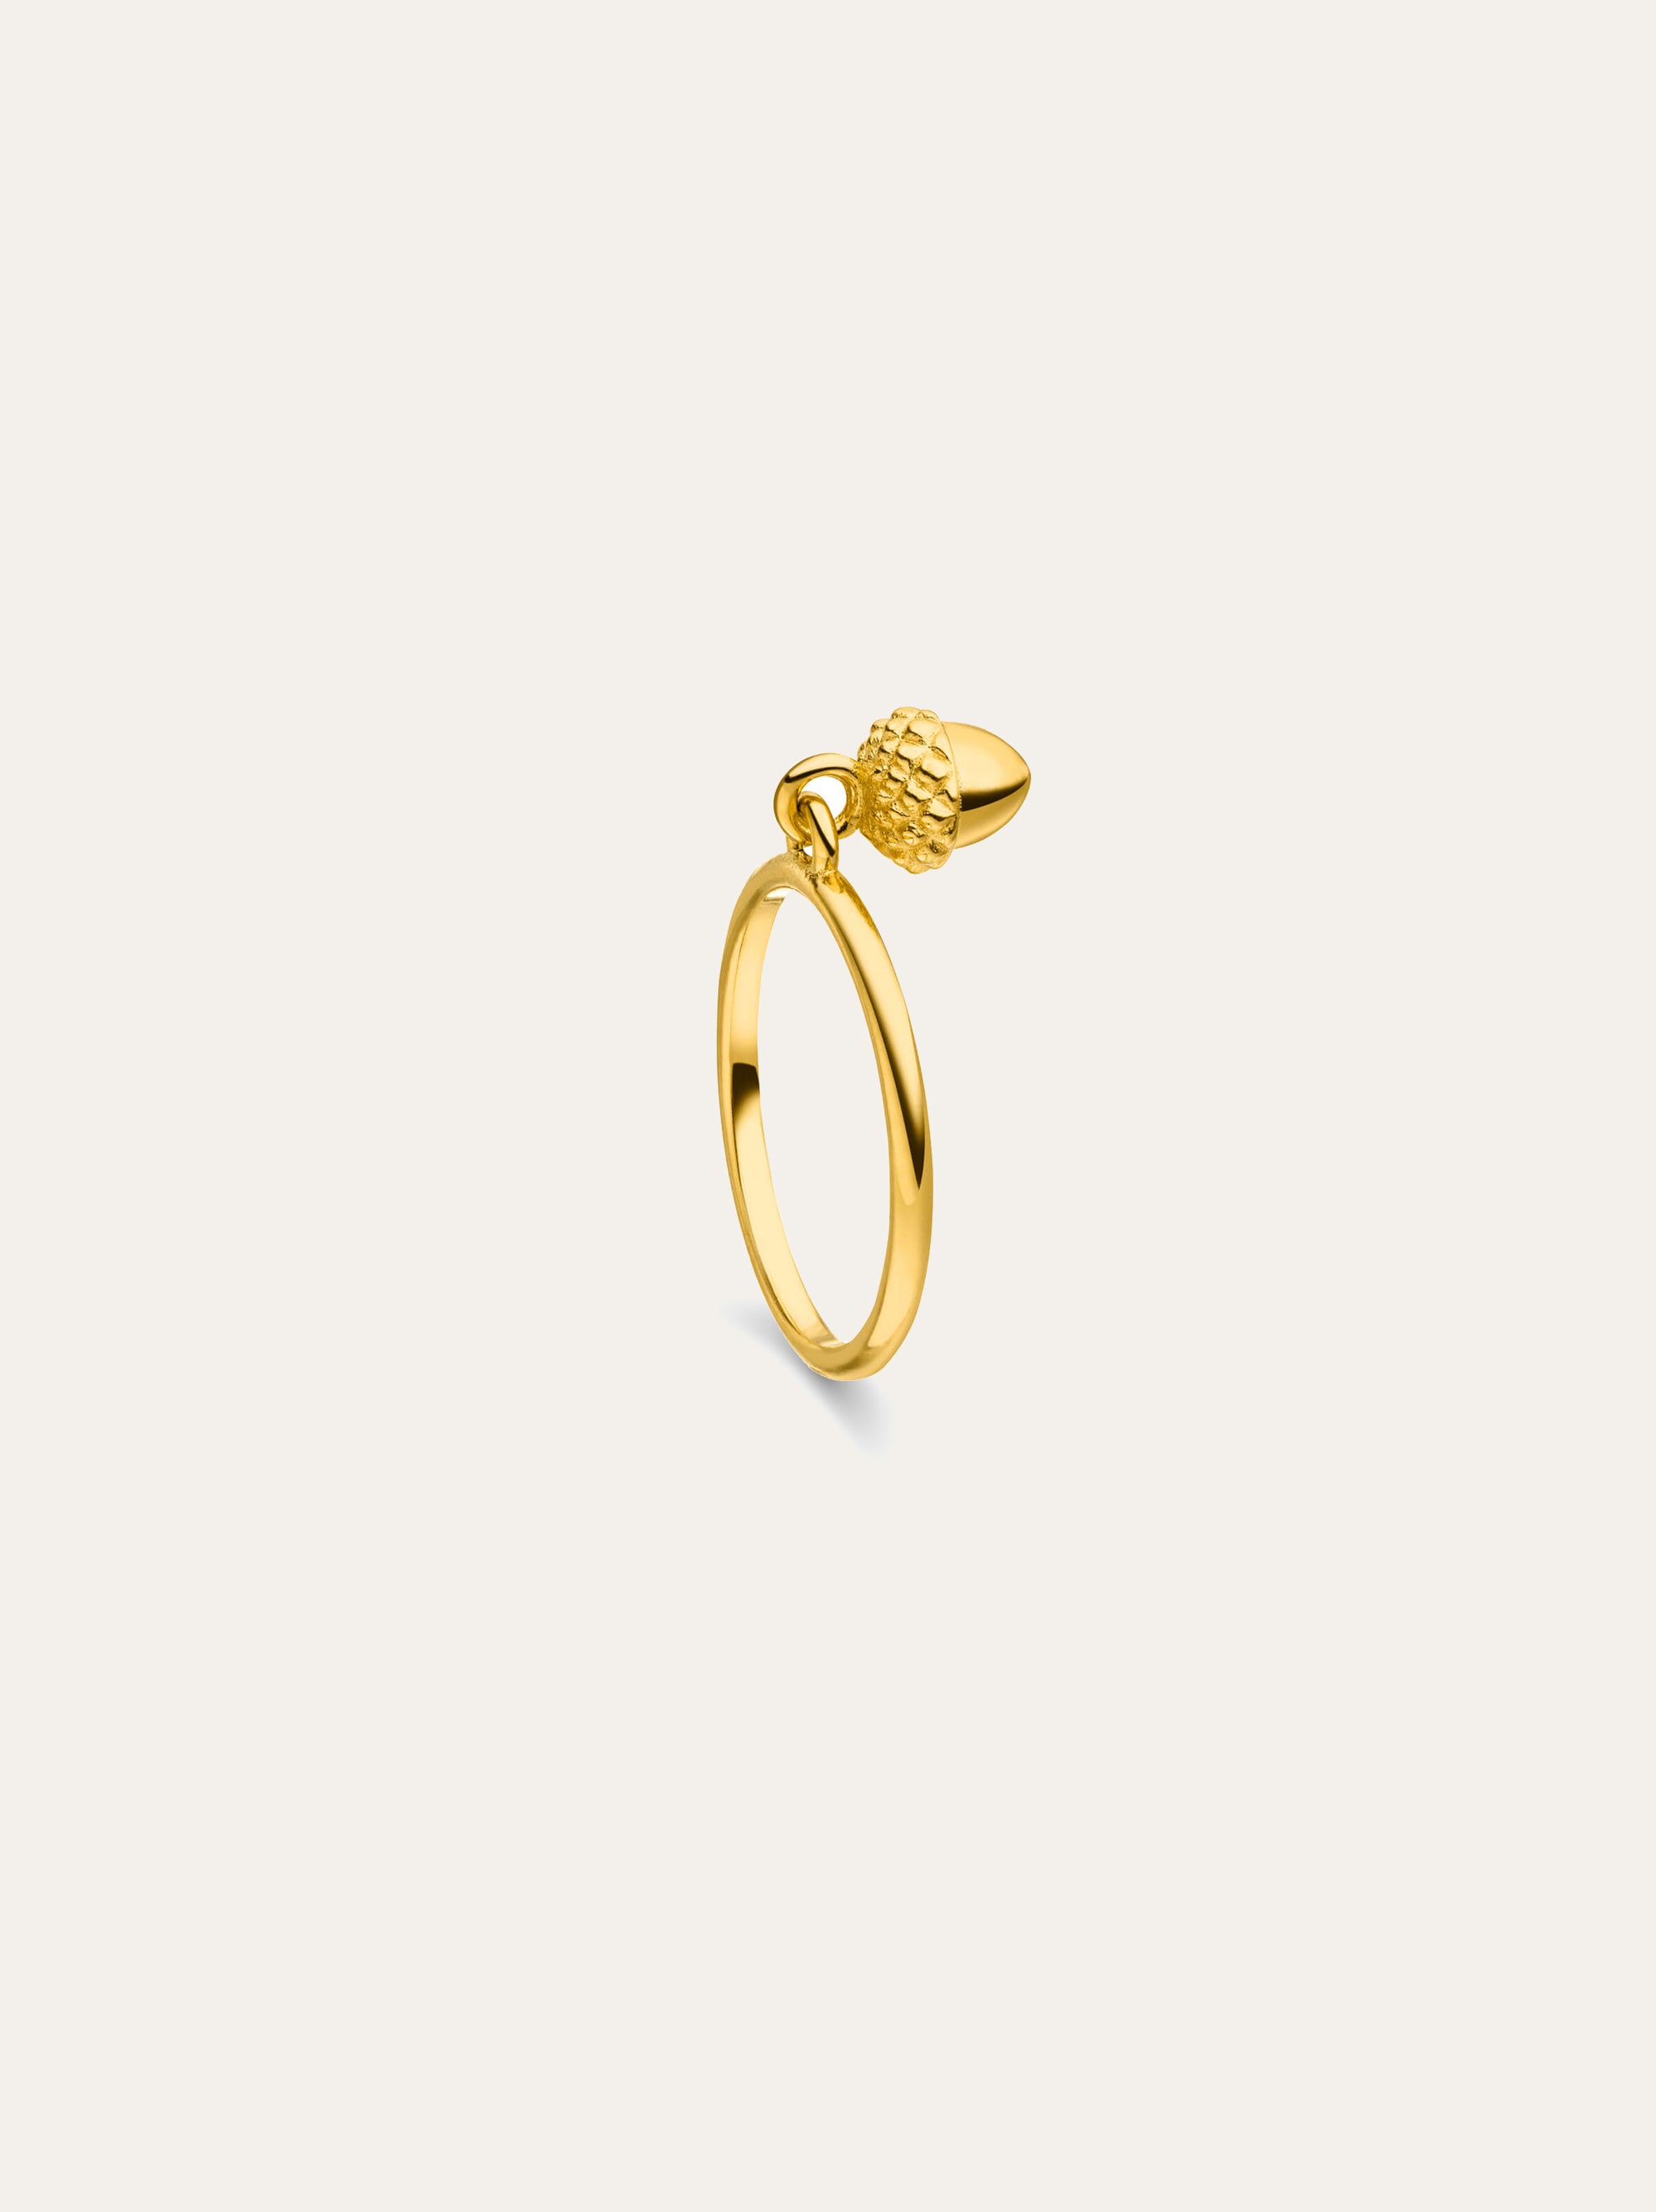 Idamari Acorn Charm Ring: 18k Fairtrade gold, acorn lucky charm ring, dainty & elegant.